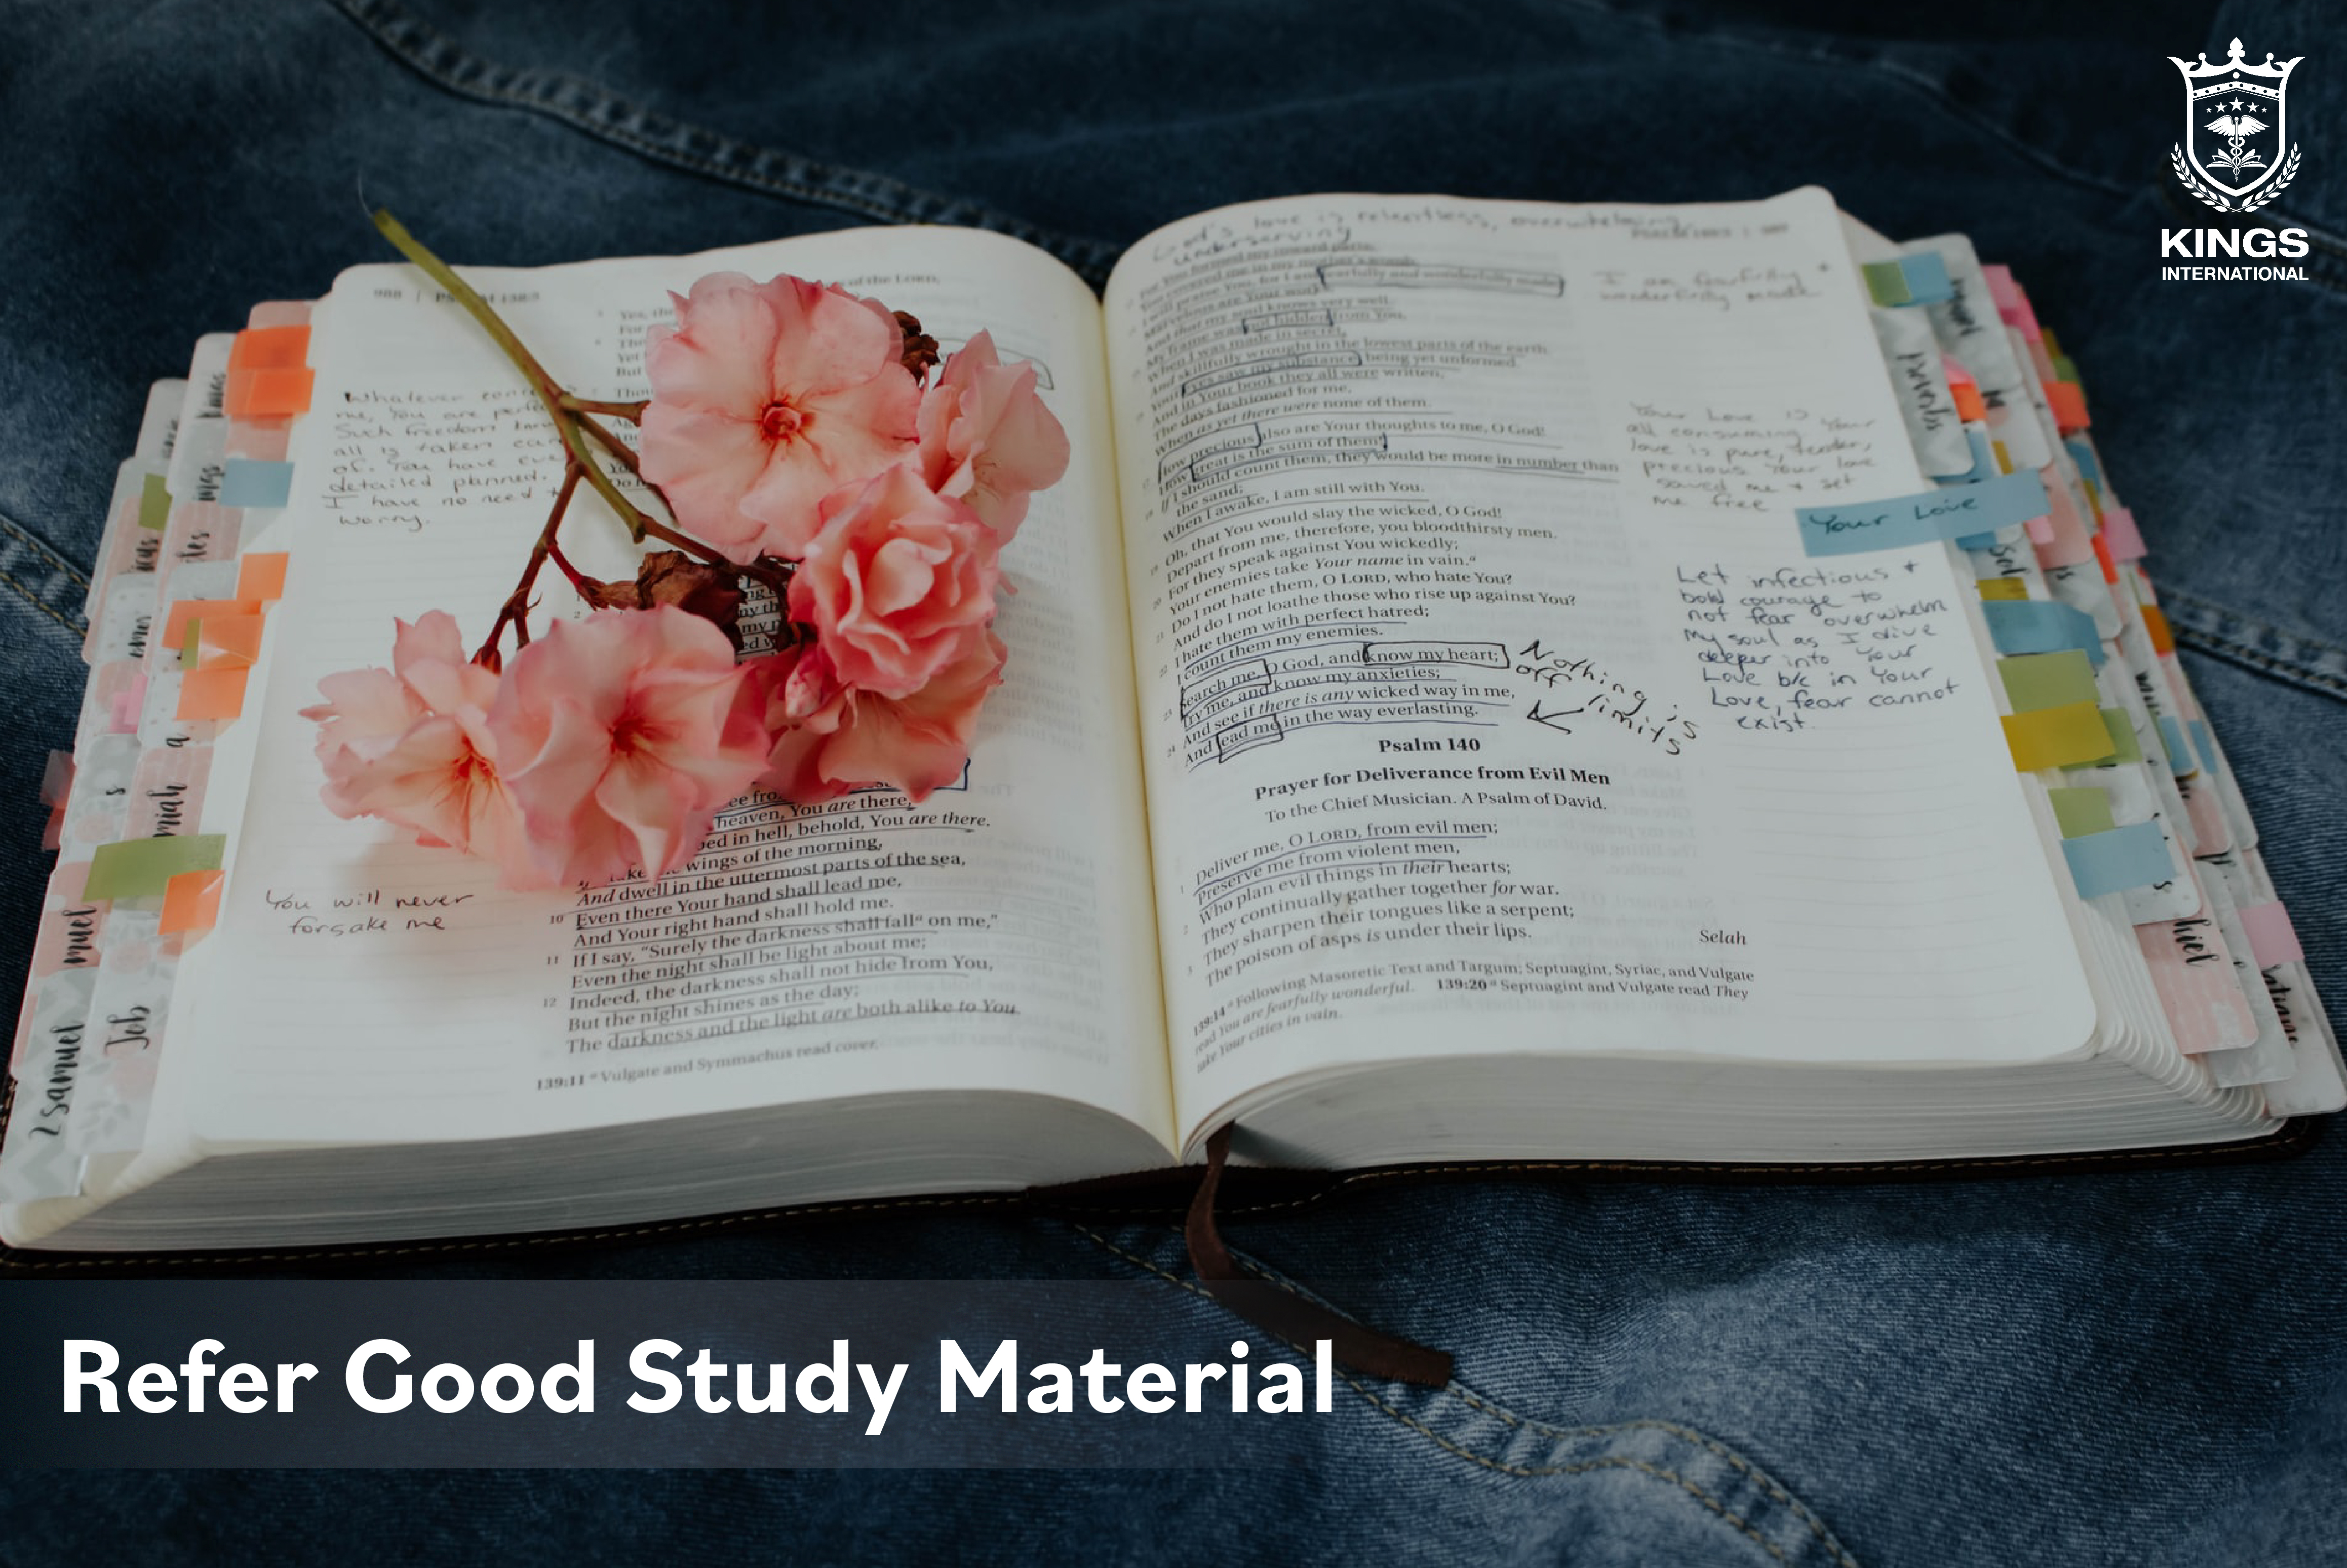 Refer good study material: NEET 2021 preparation tip